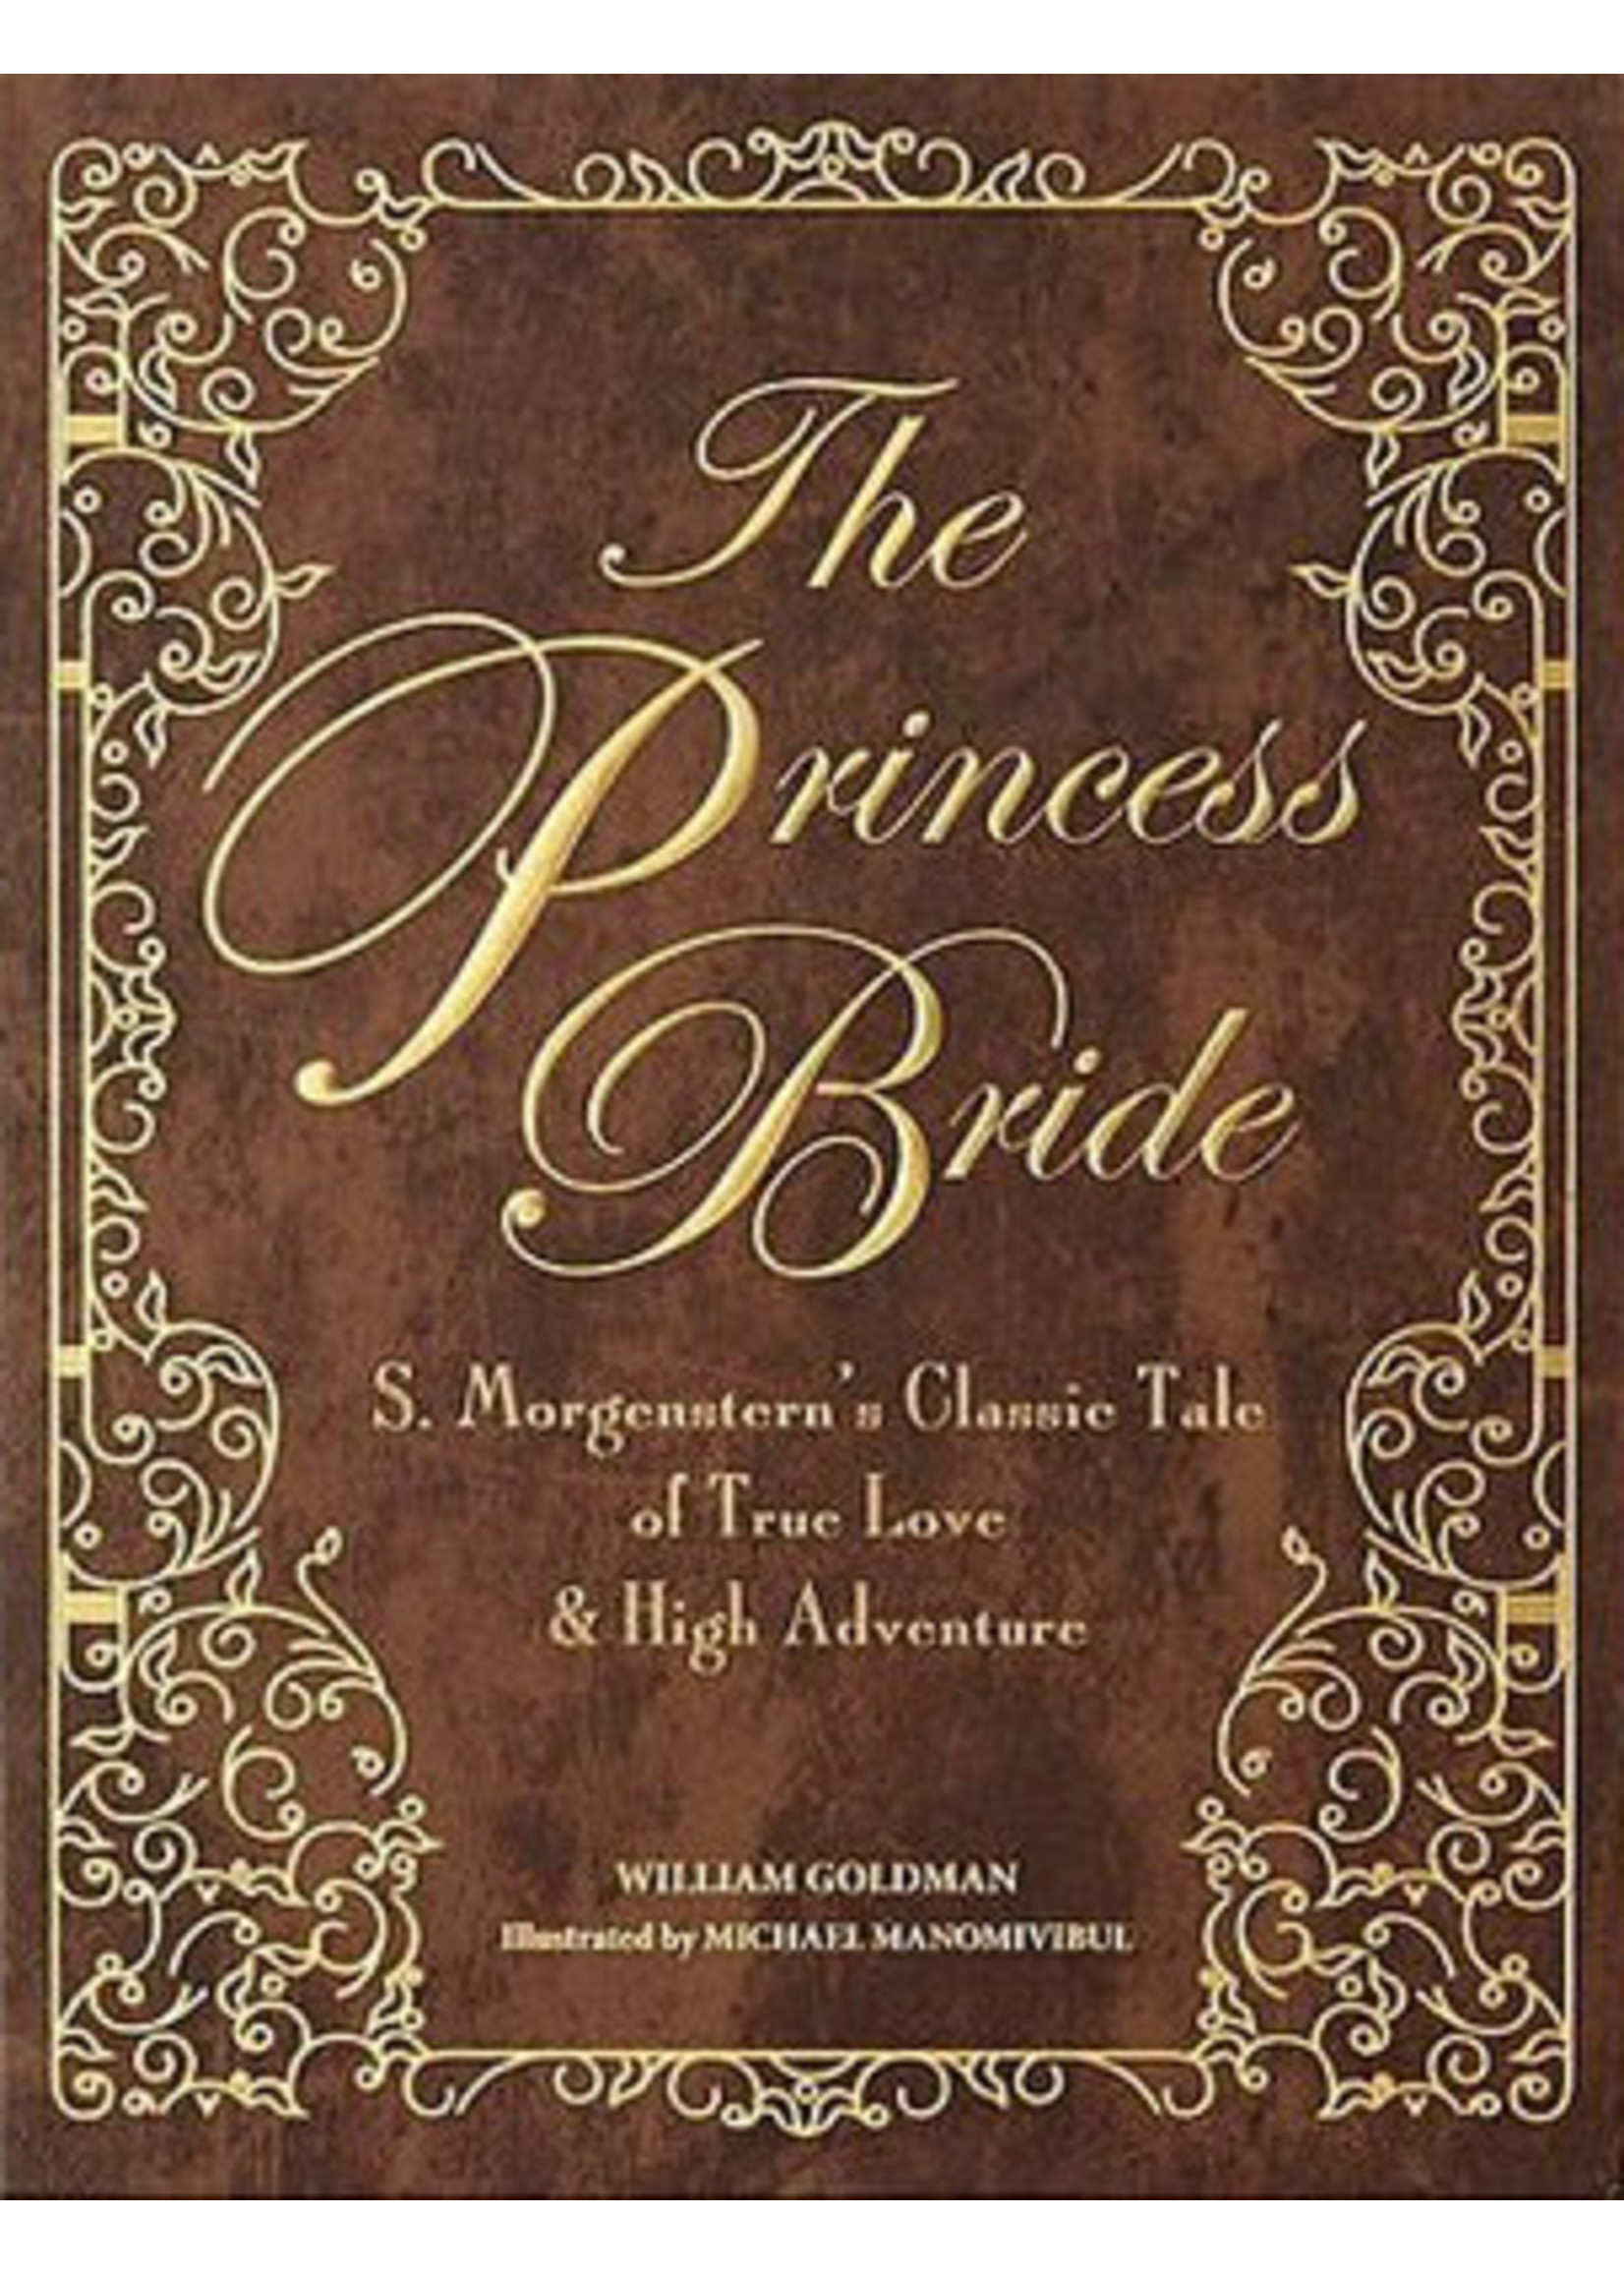 The Princess Bride: S. Morgenstern's Classic Tale of True Love and High Adventure by William Goldman, Michael Manomivibul